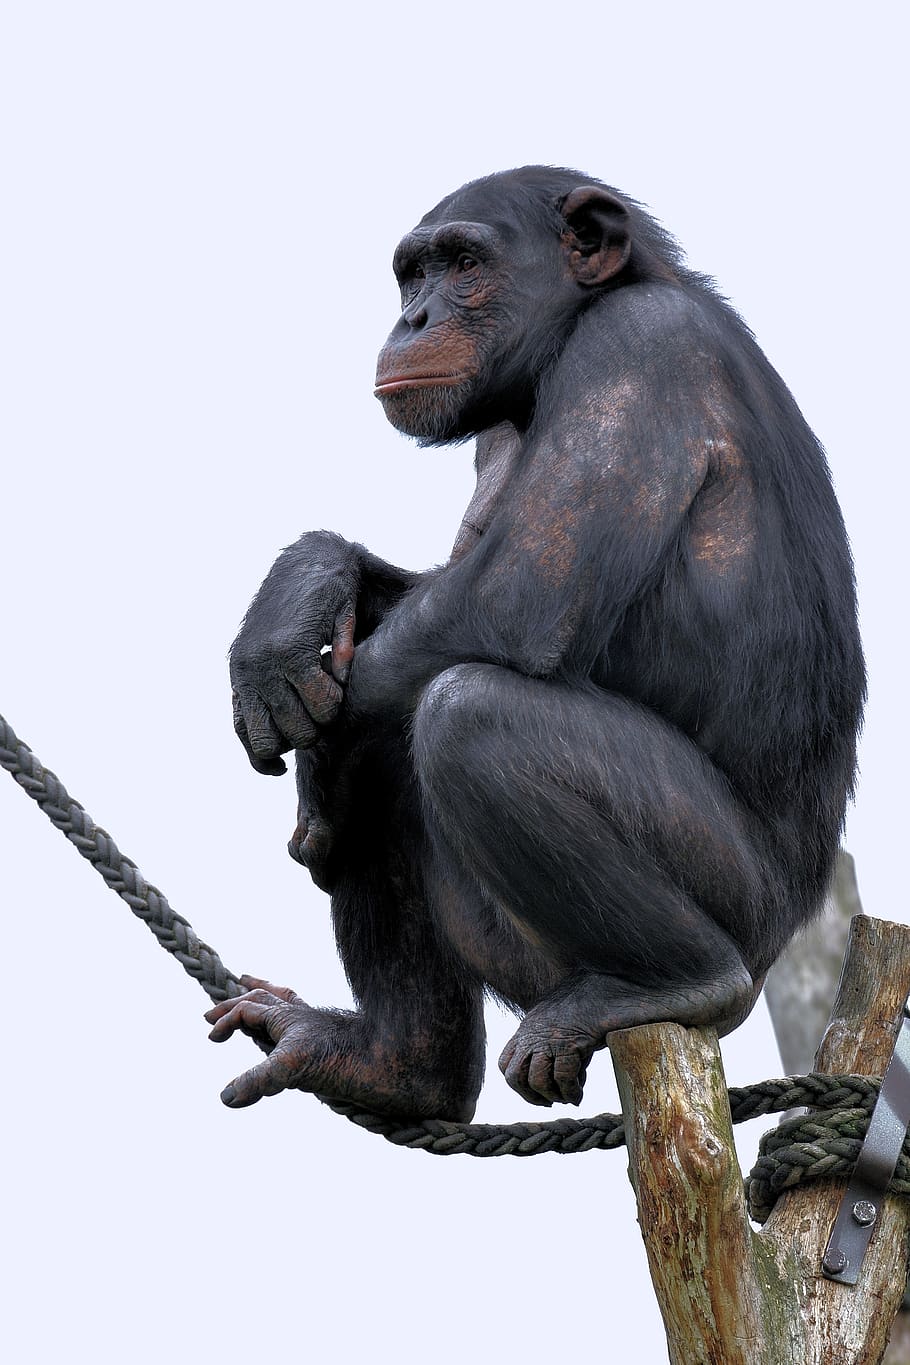 chimpanzee, monkey, primate, zoo, observing, thoughtful, animal wildlife, animals in the wild, vertebrate, ape